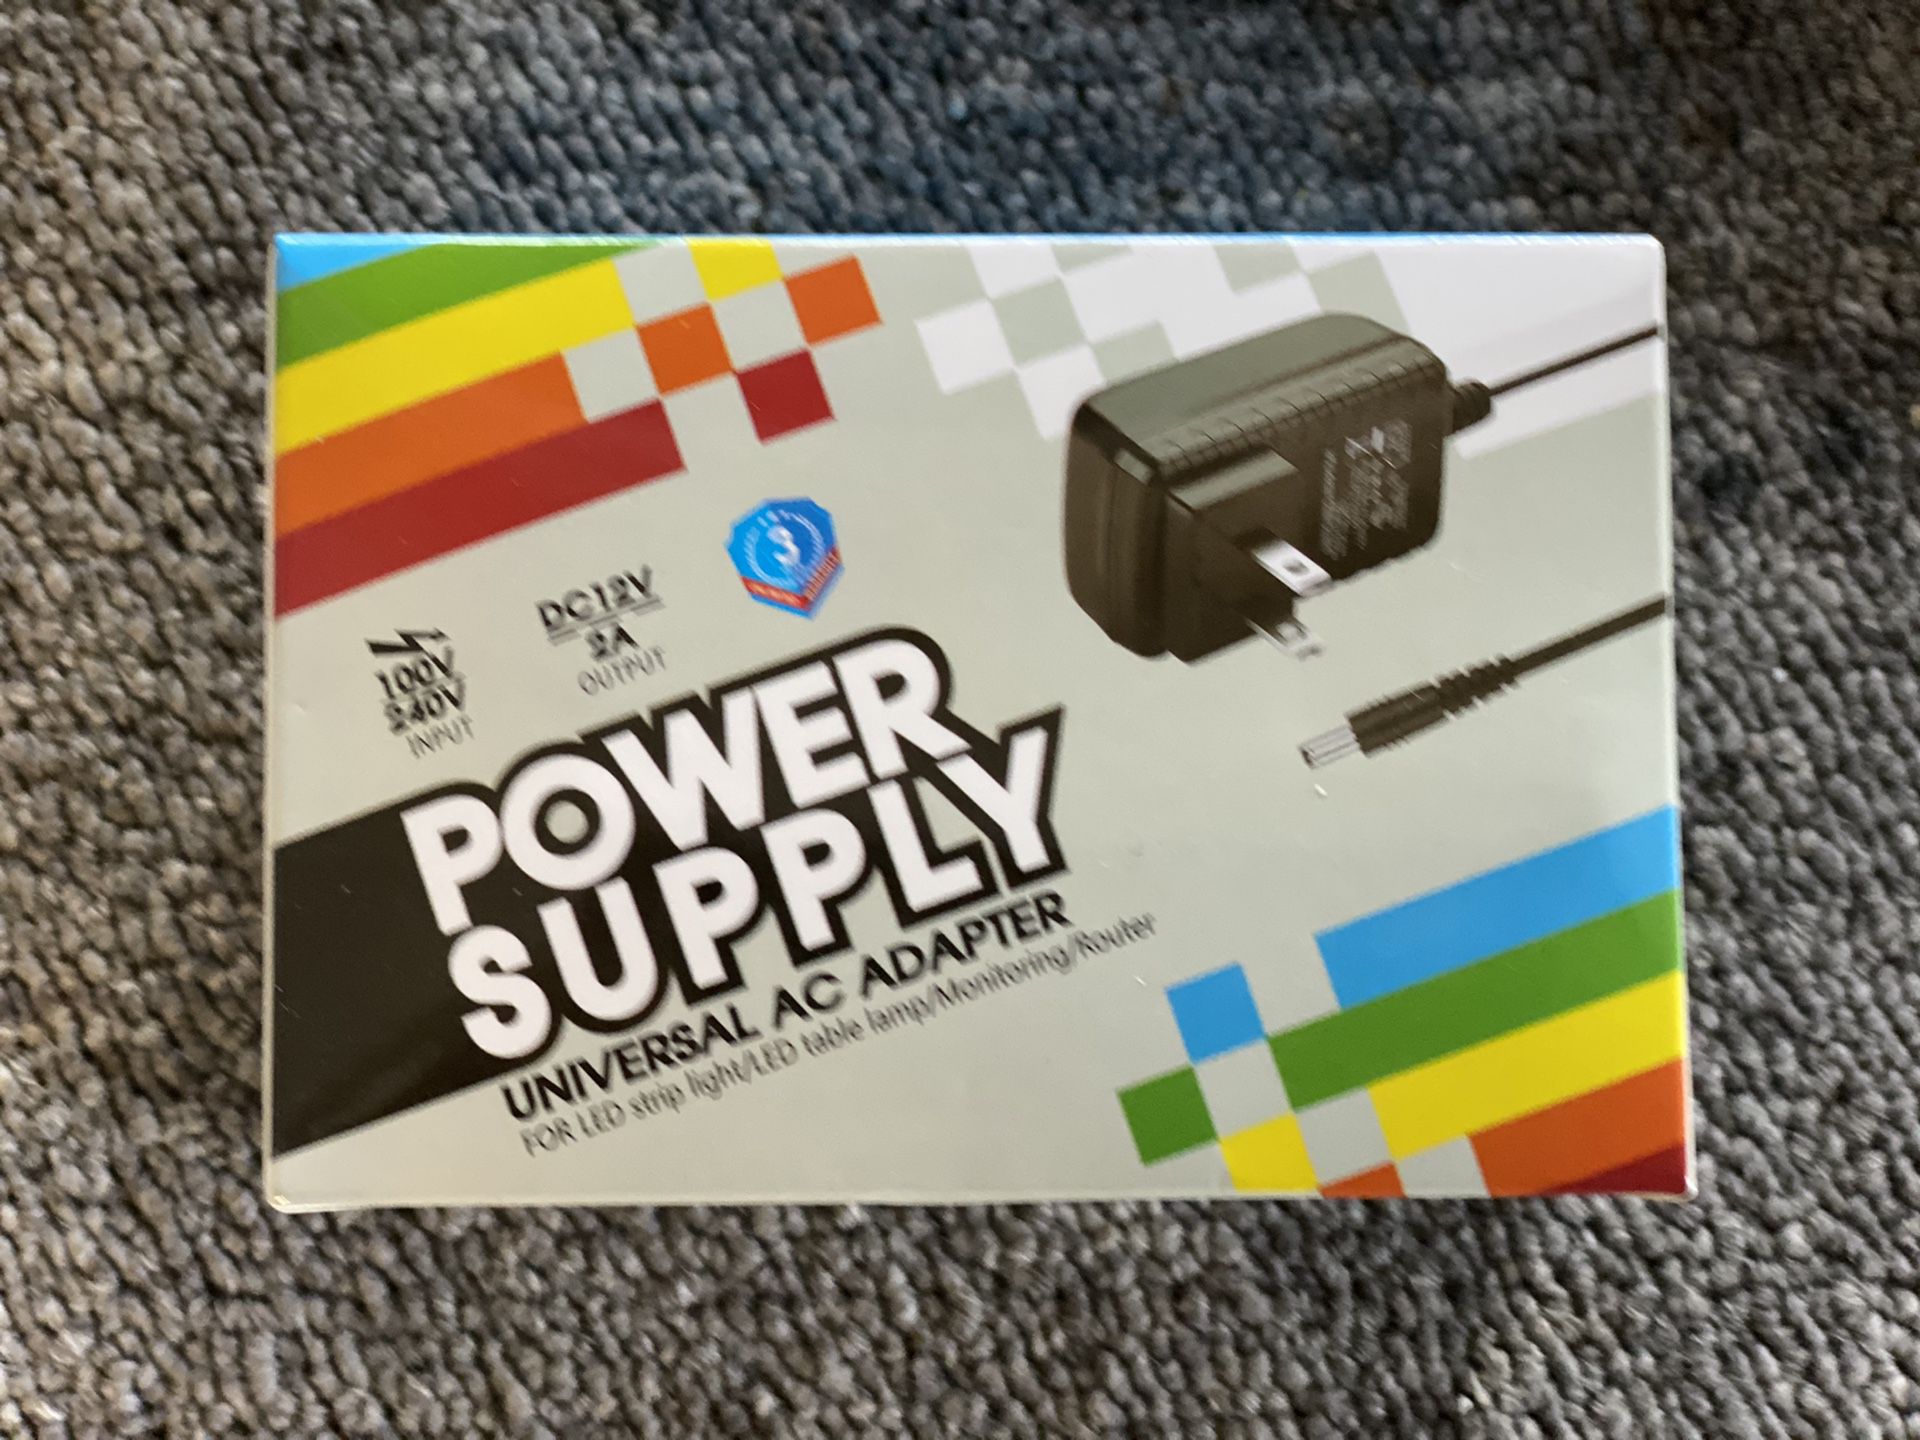 12v power supplies